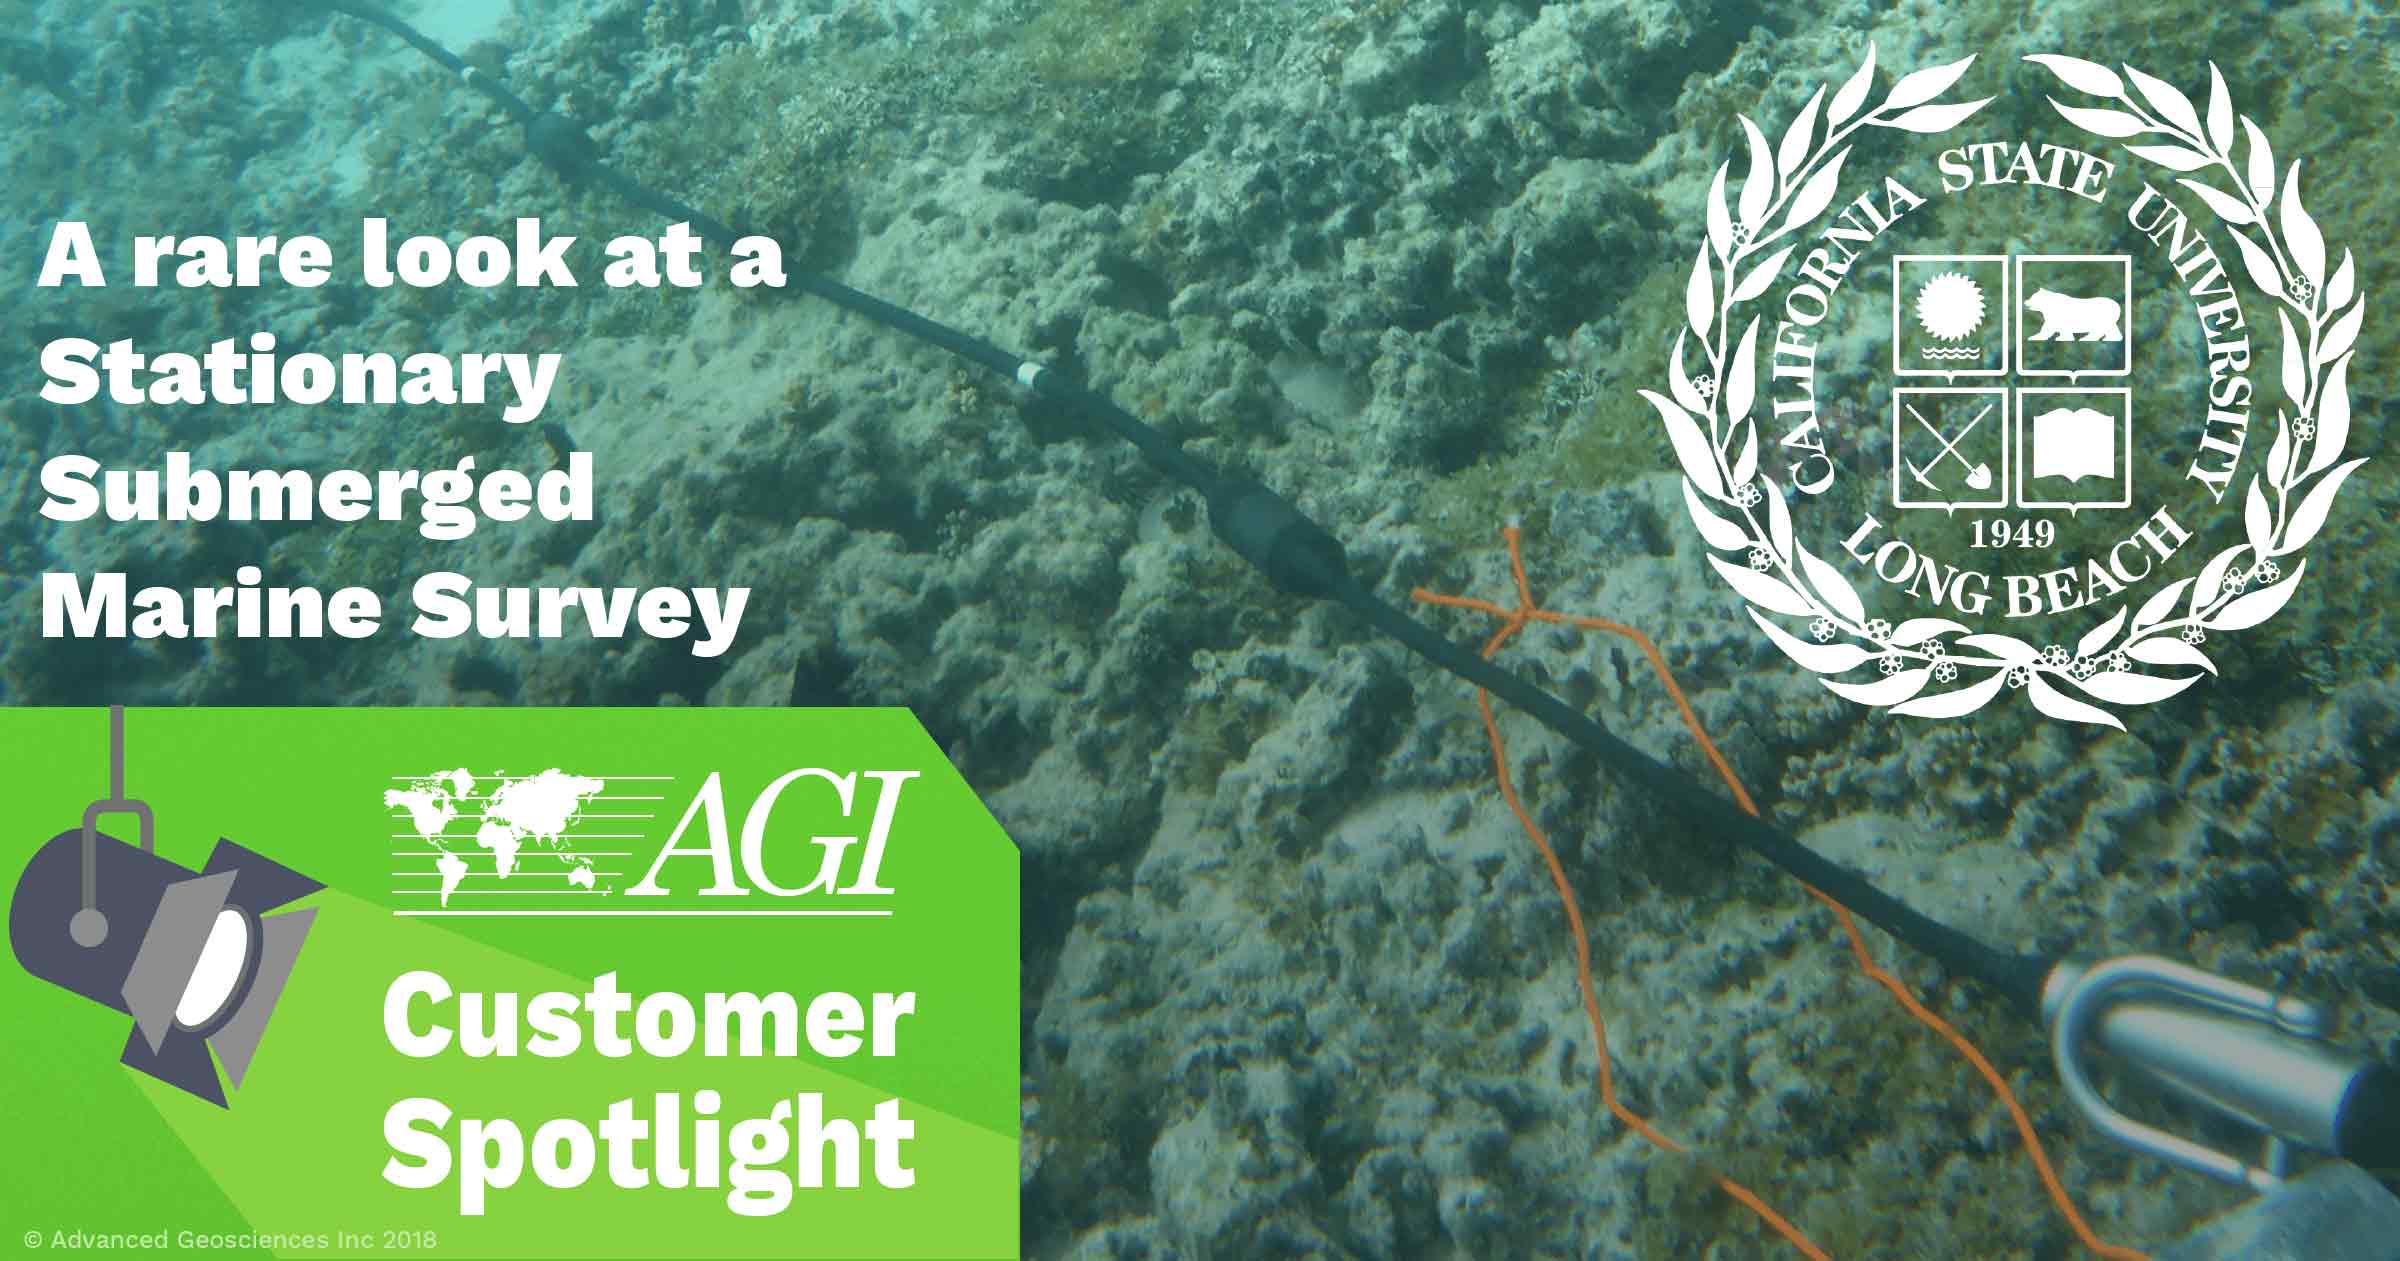 AGI Customer Spotlight: Conrey Hydrogeology Program | A Rare Look At A Stationary Submerged Marine Survey